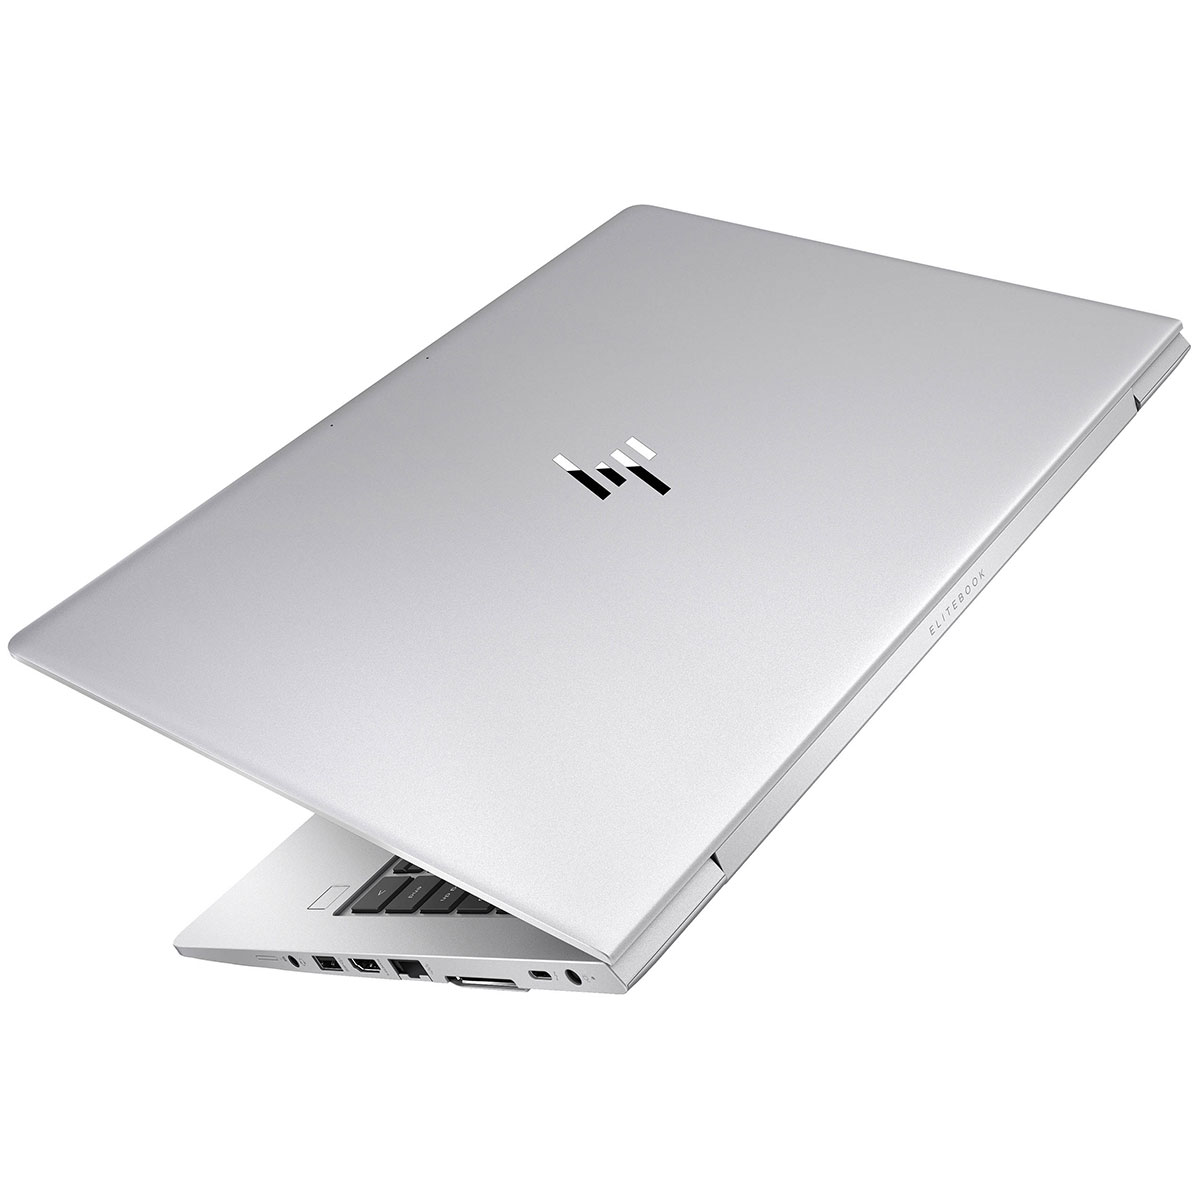 HP Elitebook 840 G4 Corei5 (7th Gen) 8 GB RAM 256 GB SSD with